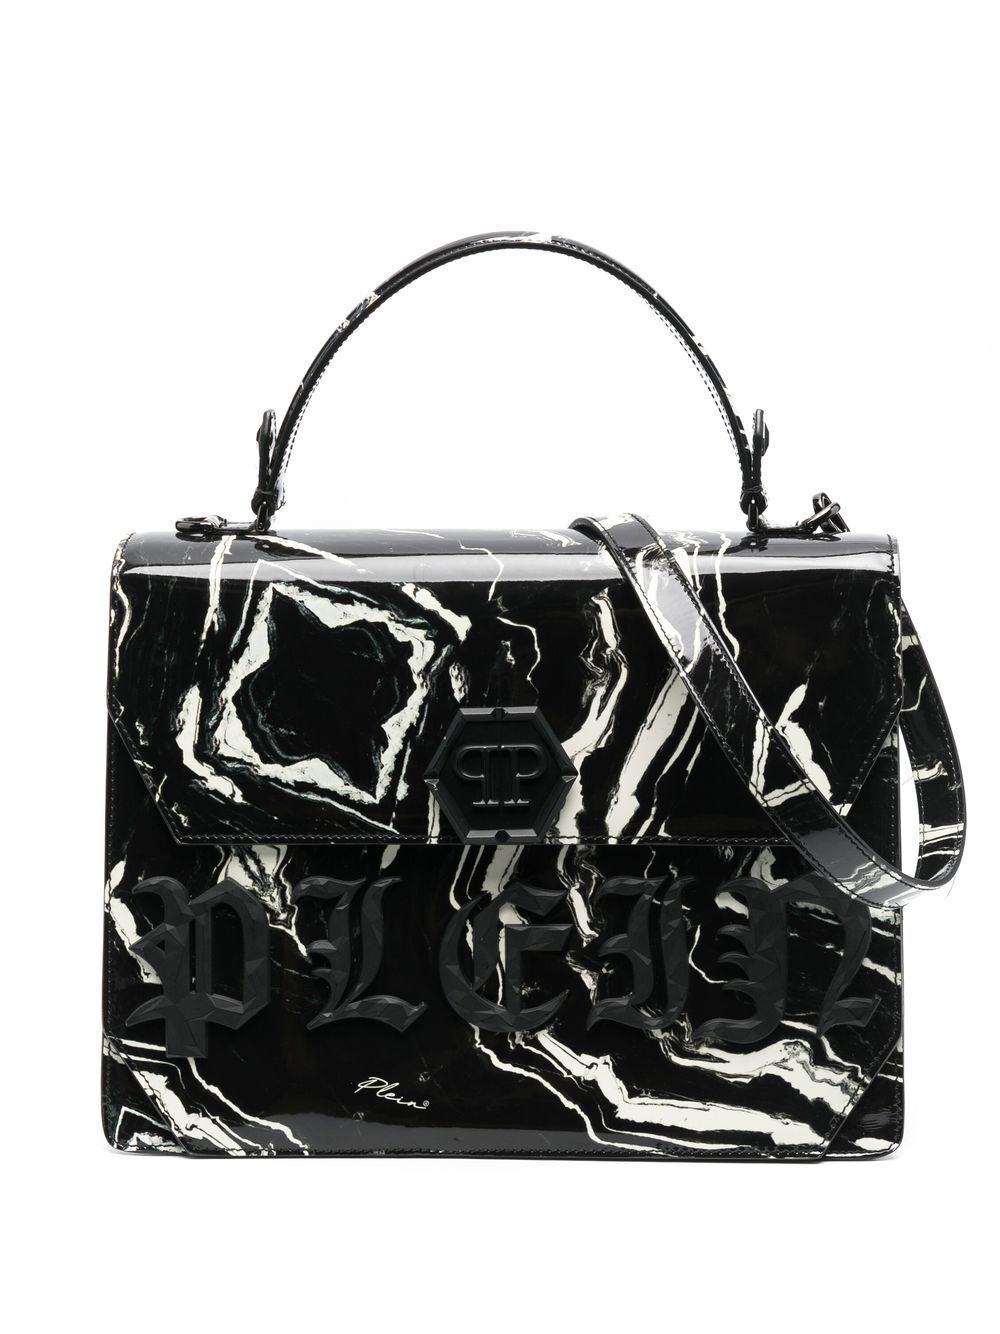 Philipp Plein marble-print top handle tote bag - Black